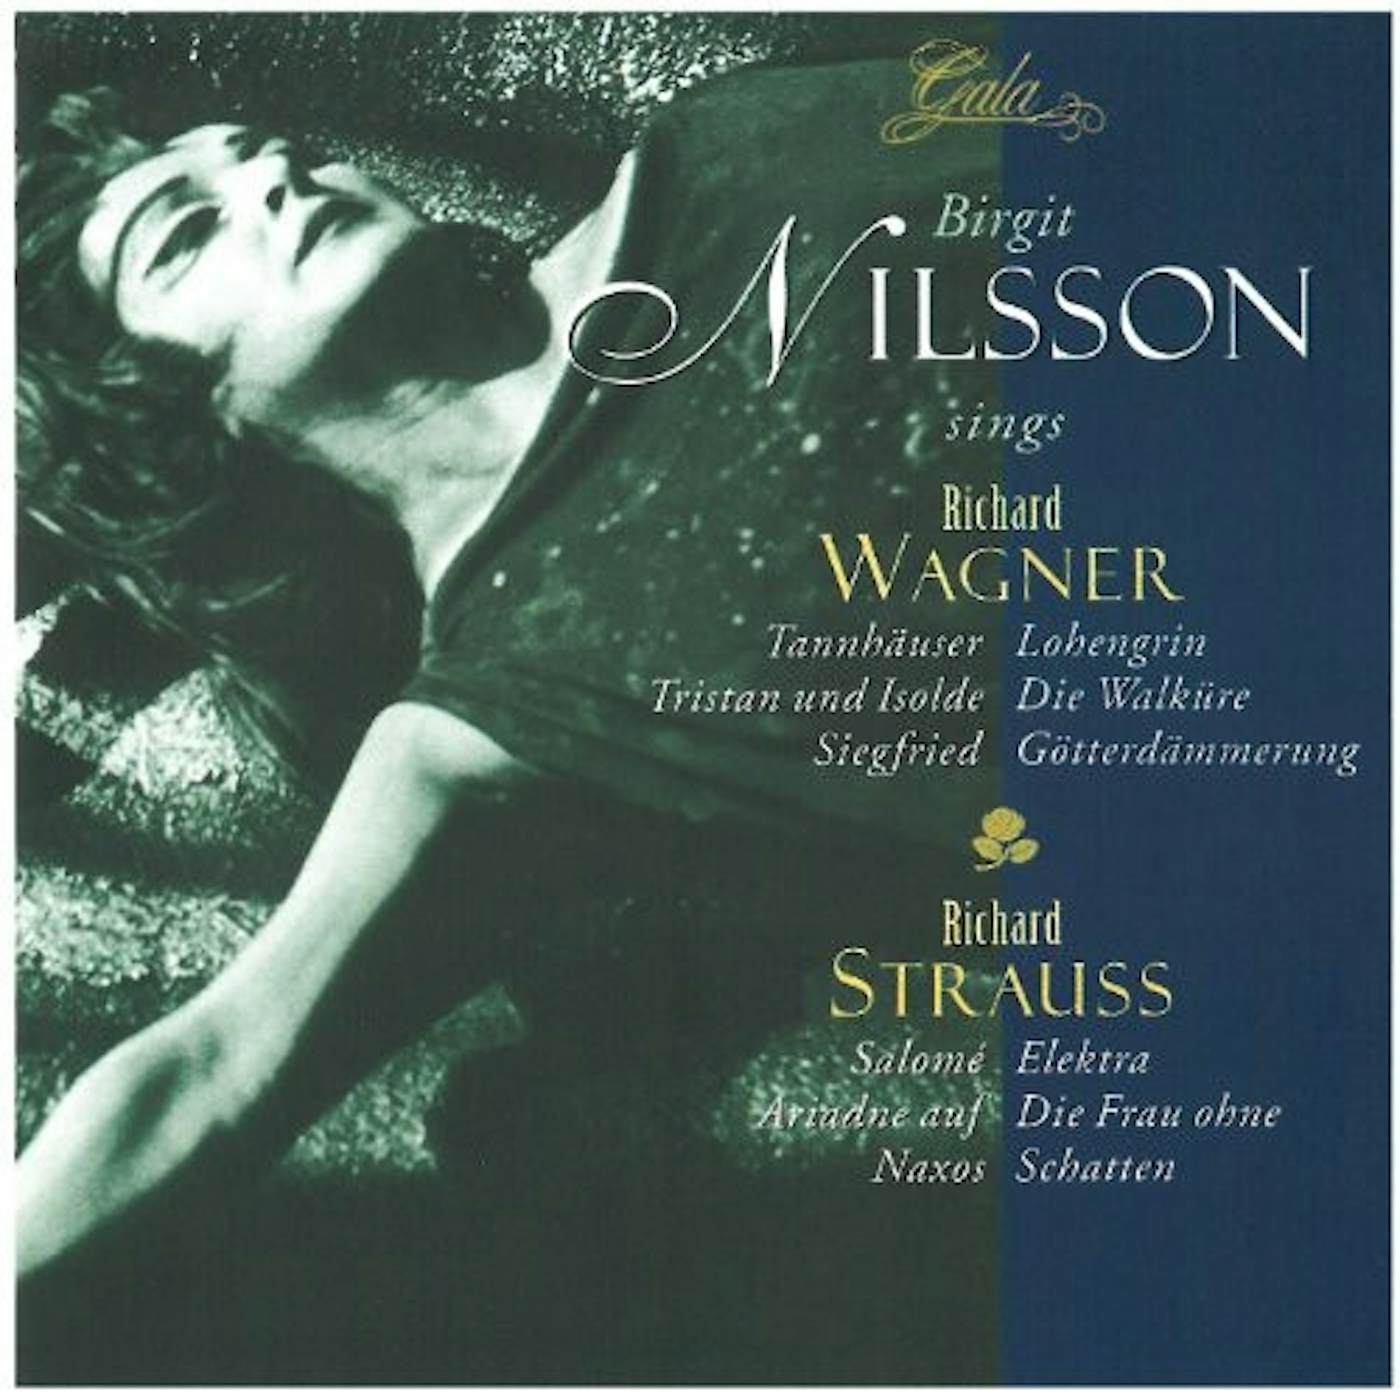 BIRGIT NILSSON SINGS WAGNER & STRAUSS CD